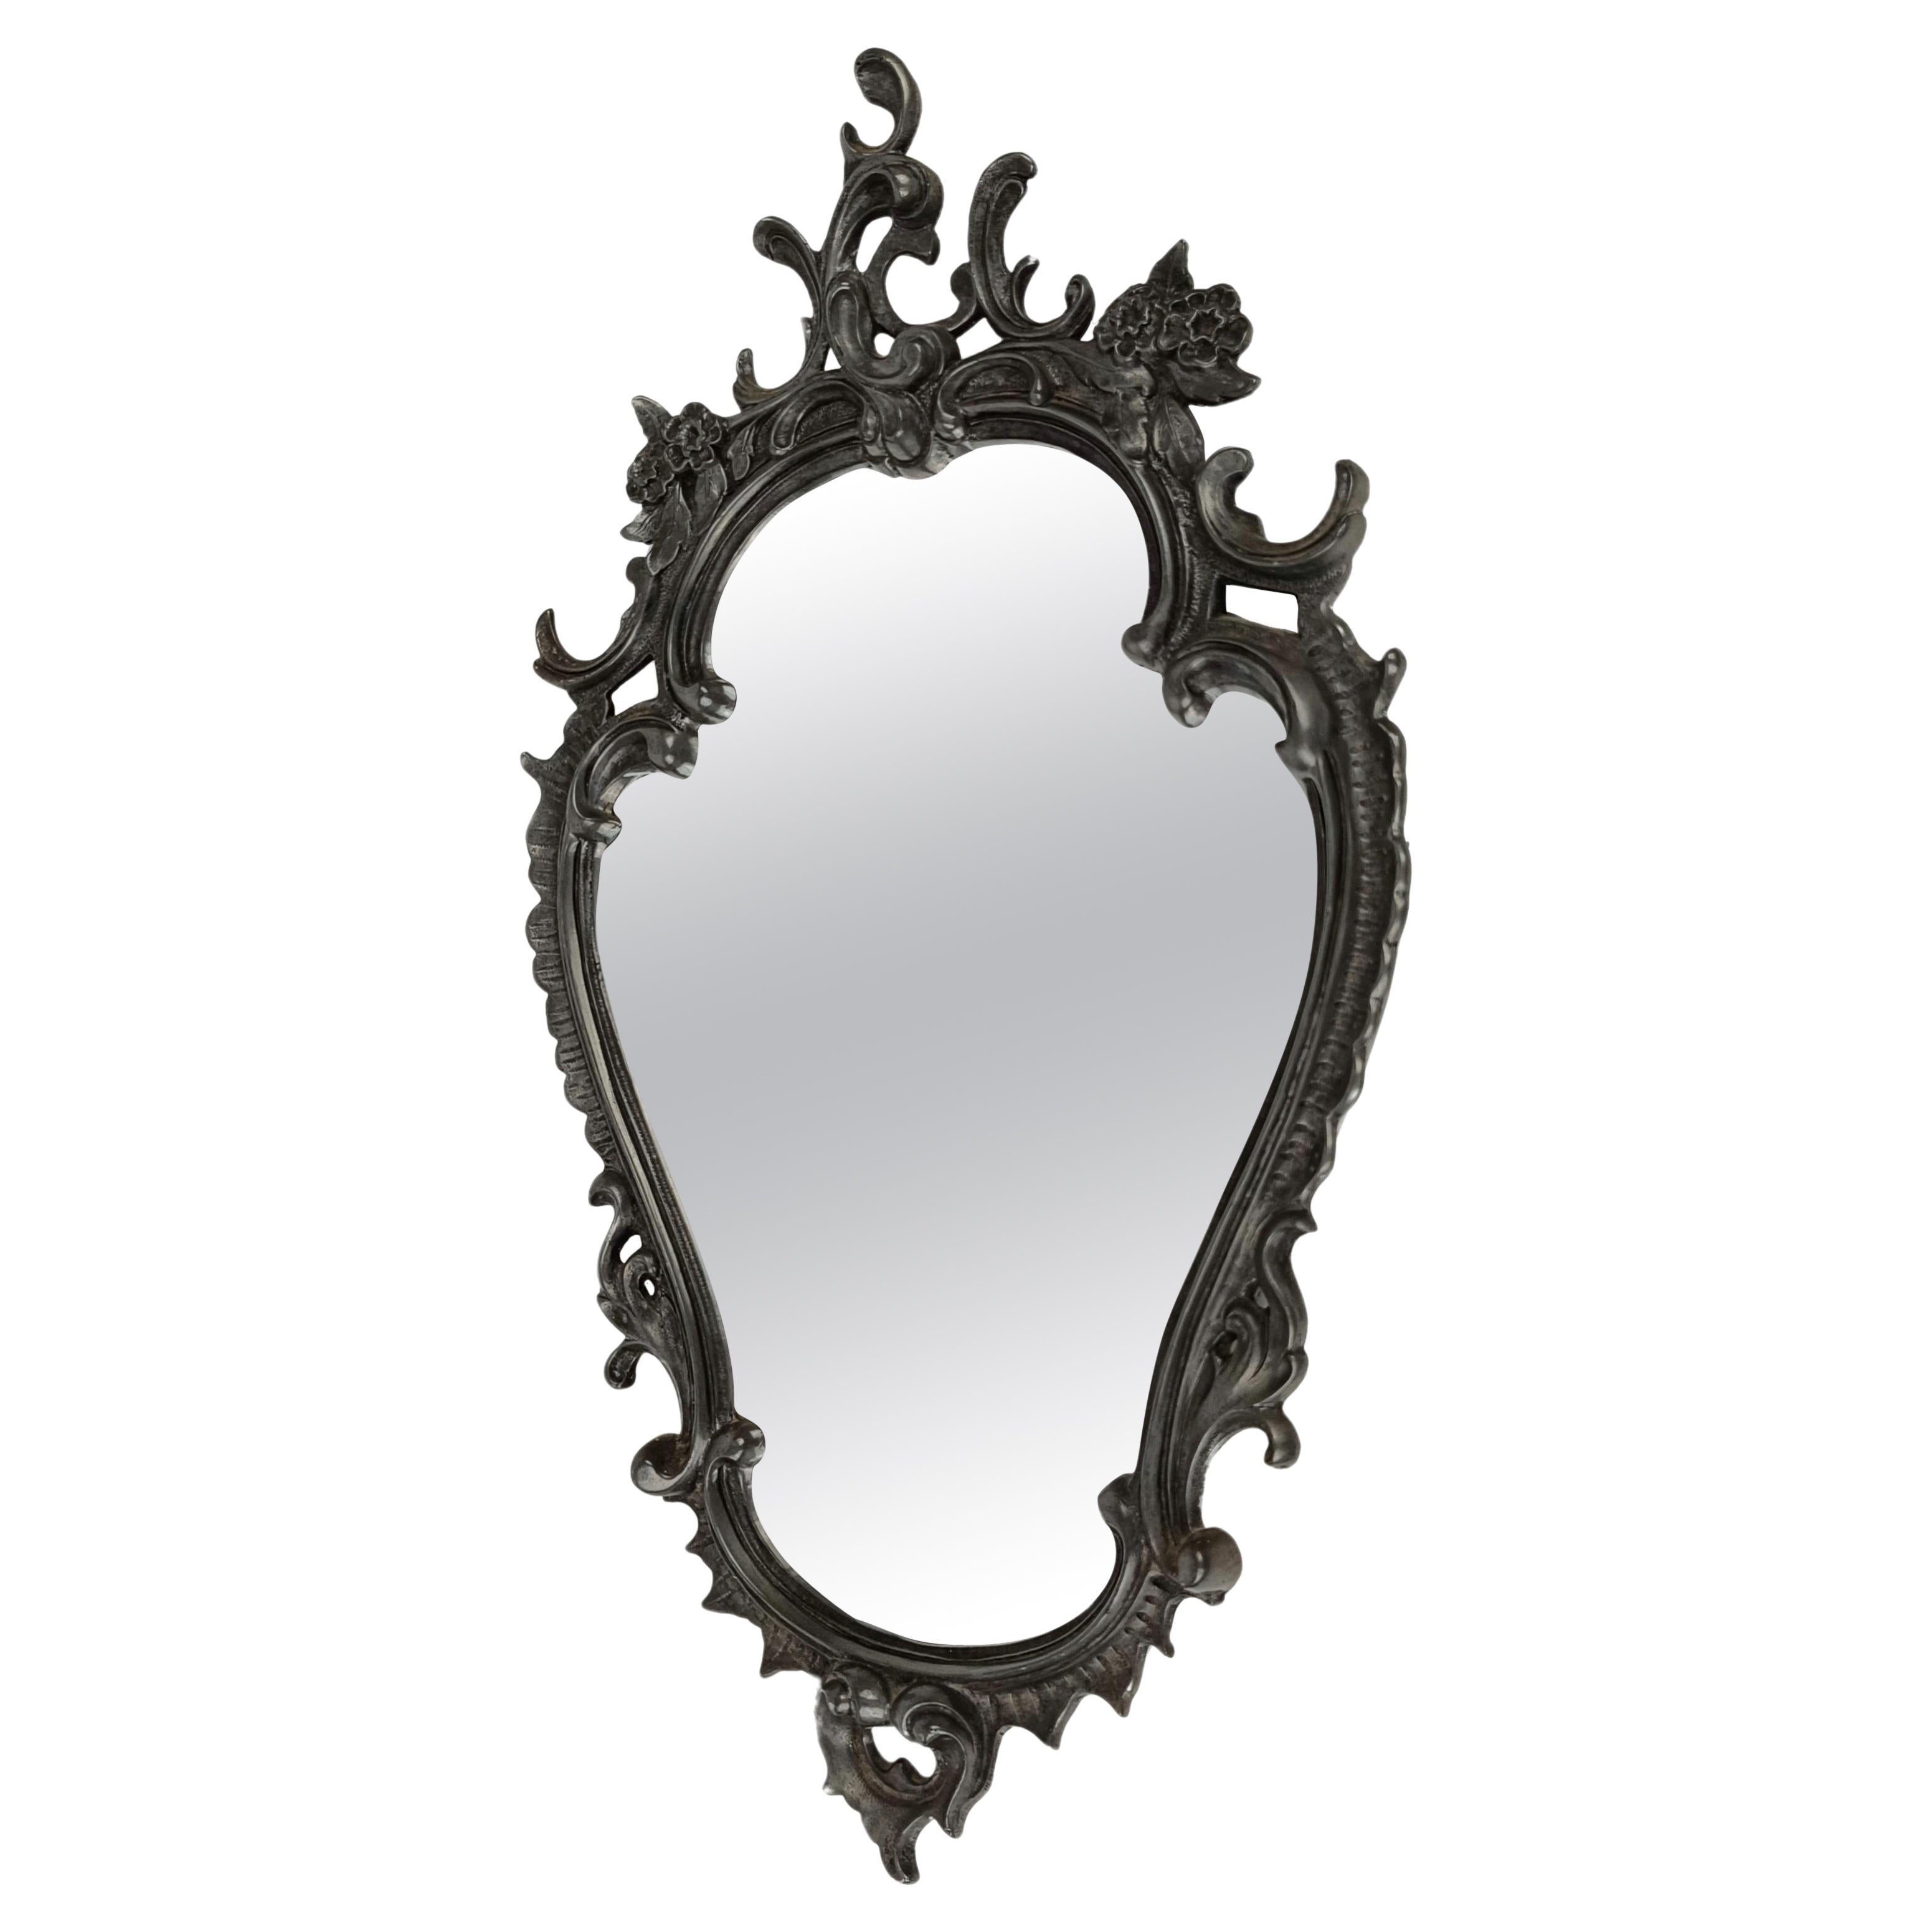 Vintage Mirror in Baroque Rococo style made in german silver